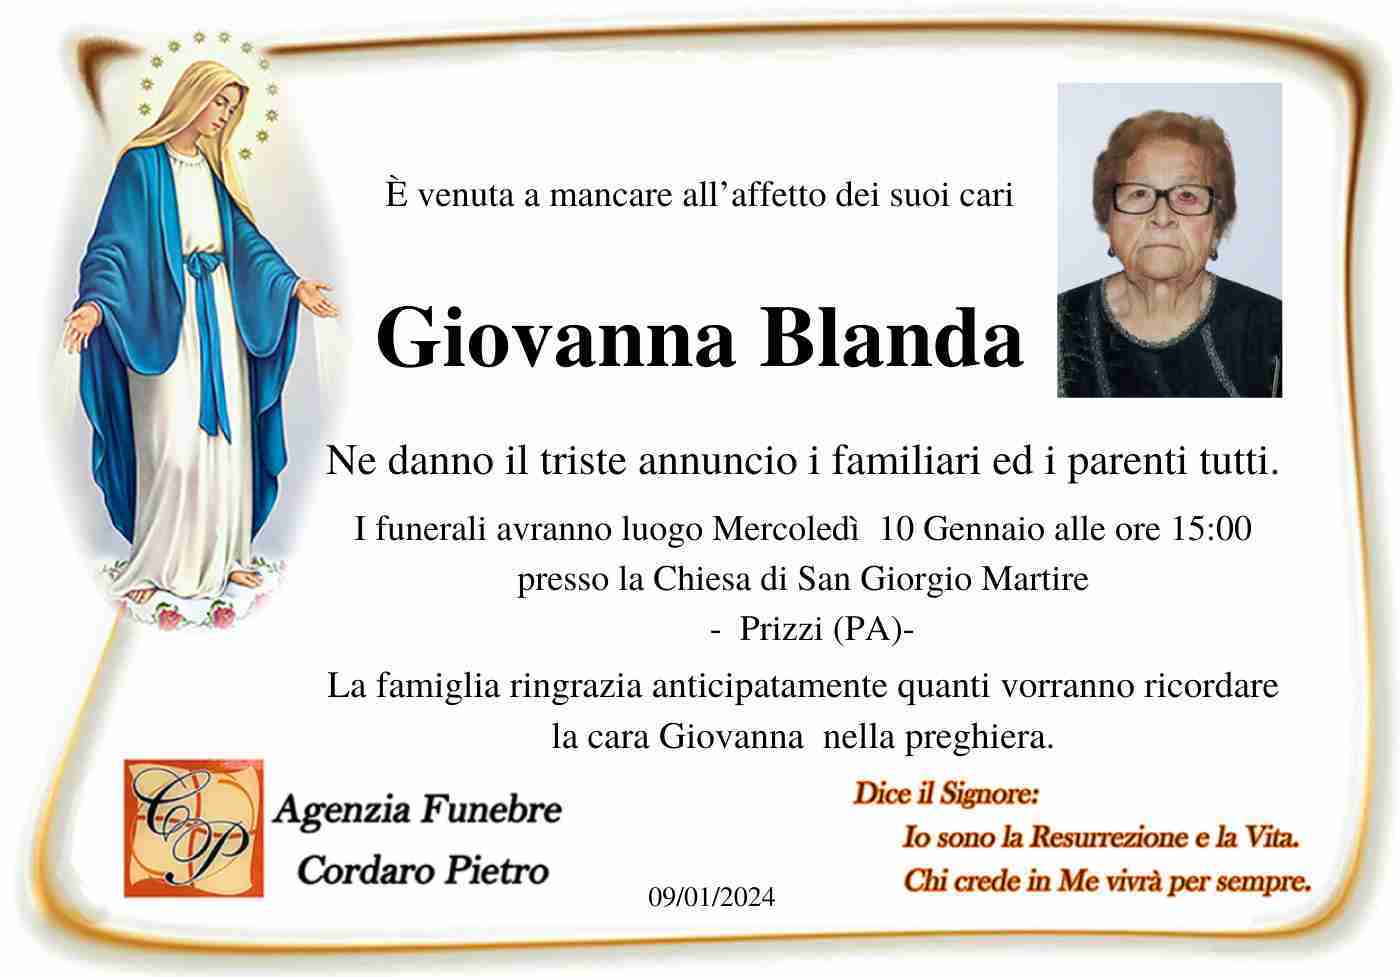 Giovanna Blanda